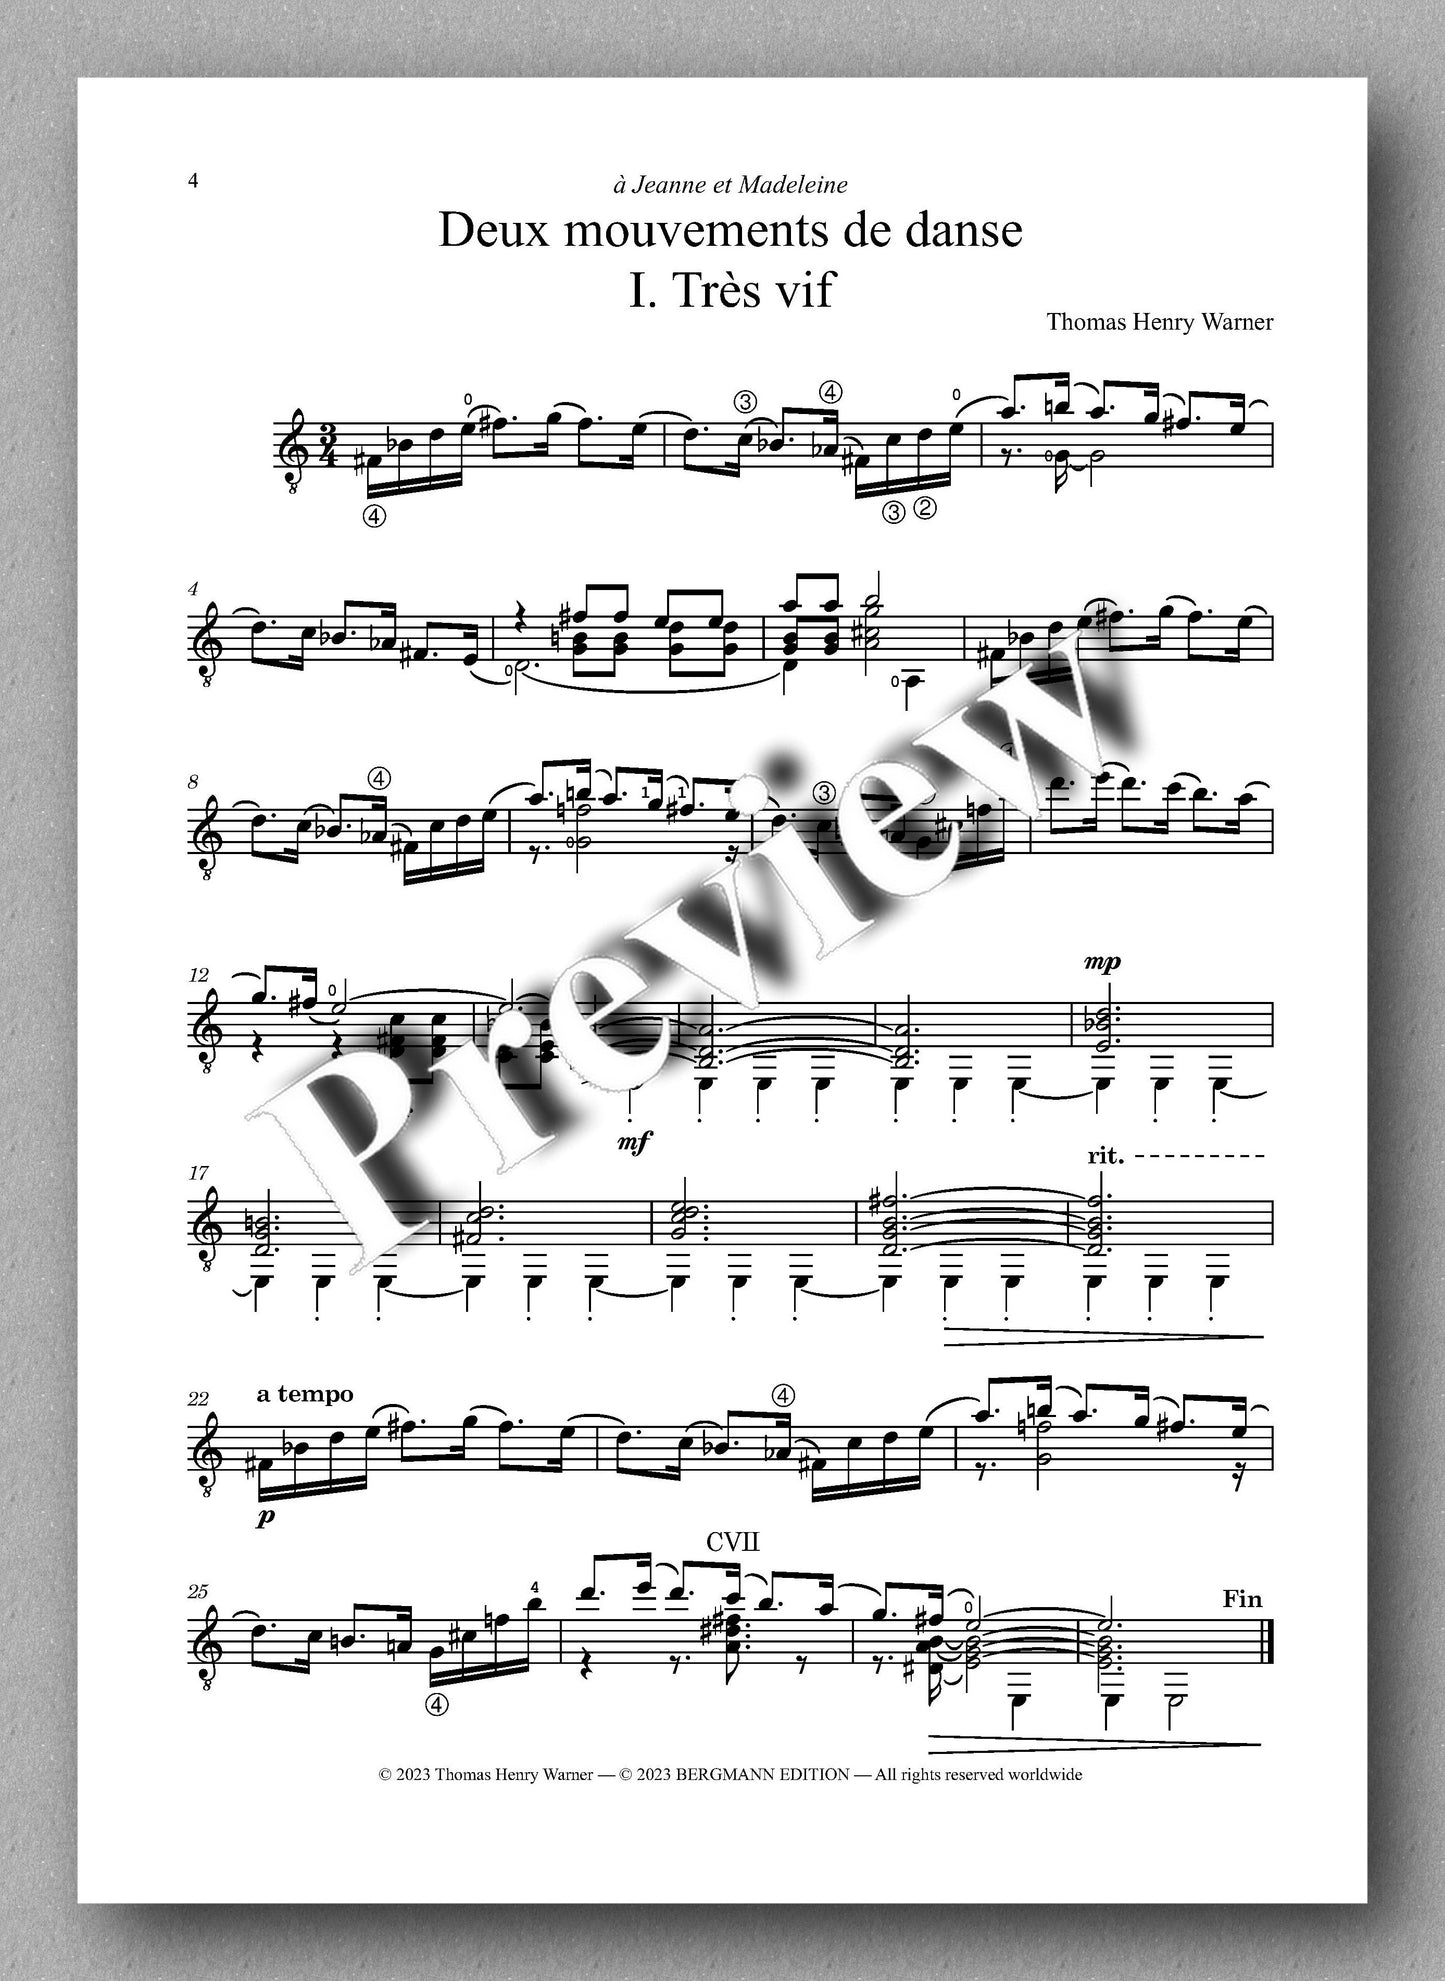 Deux mouvements de danse, by  Thomas Henry Warner - preview of the music score 1